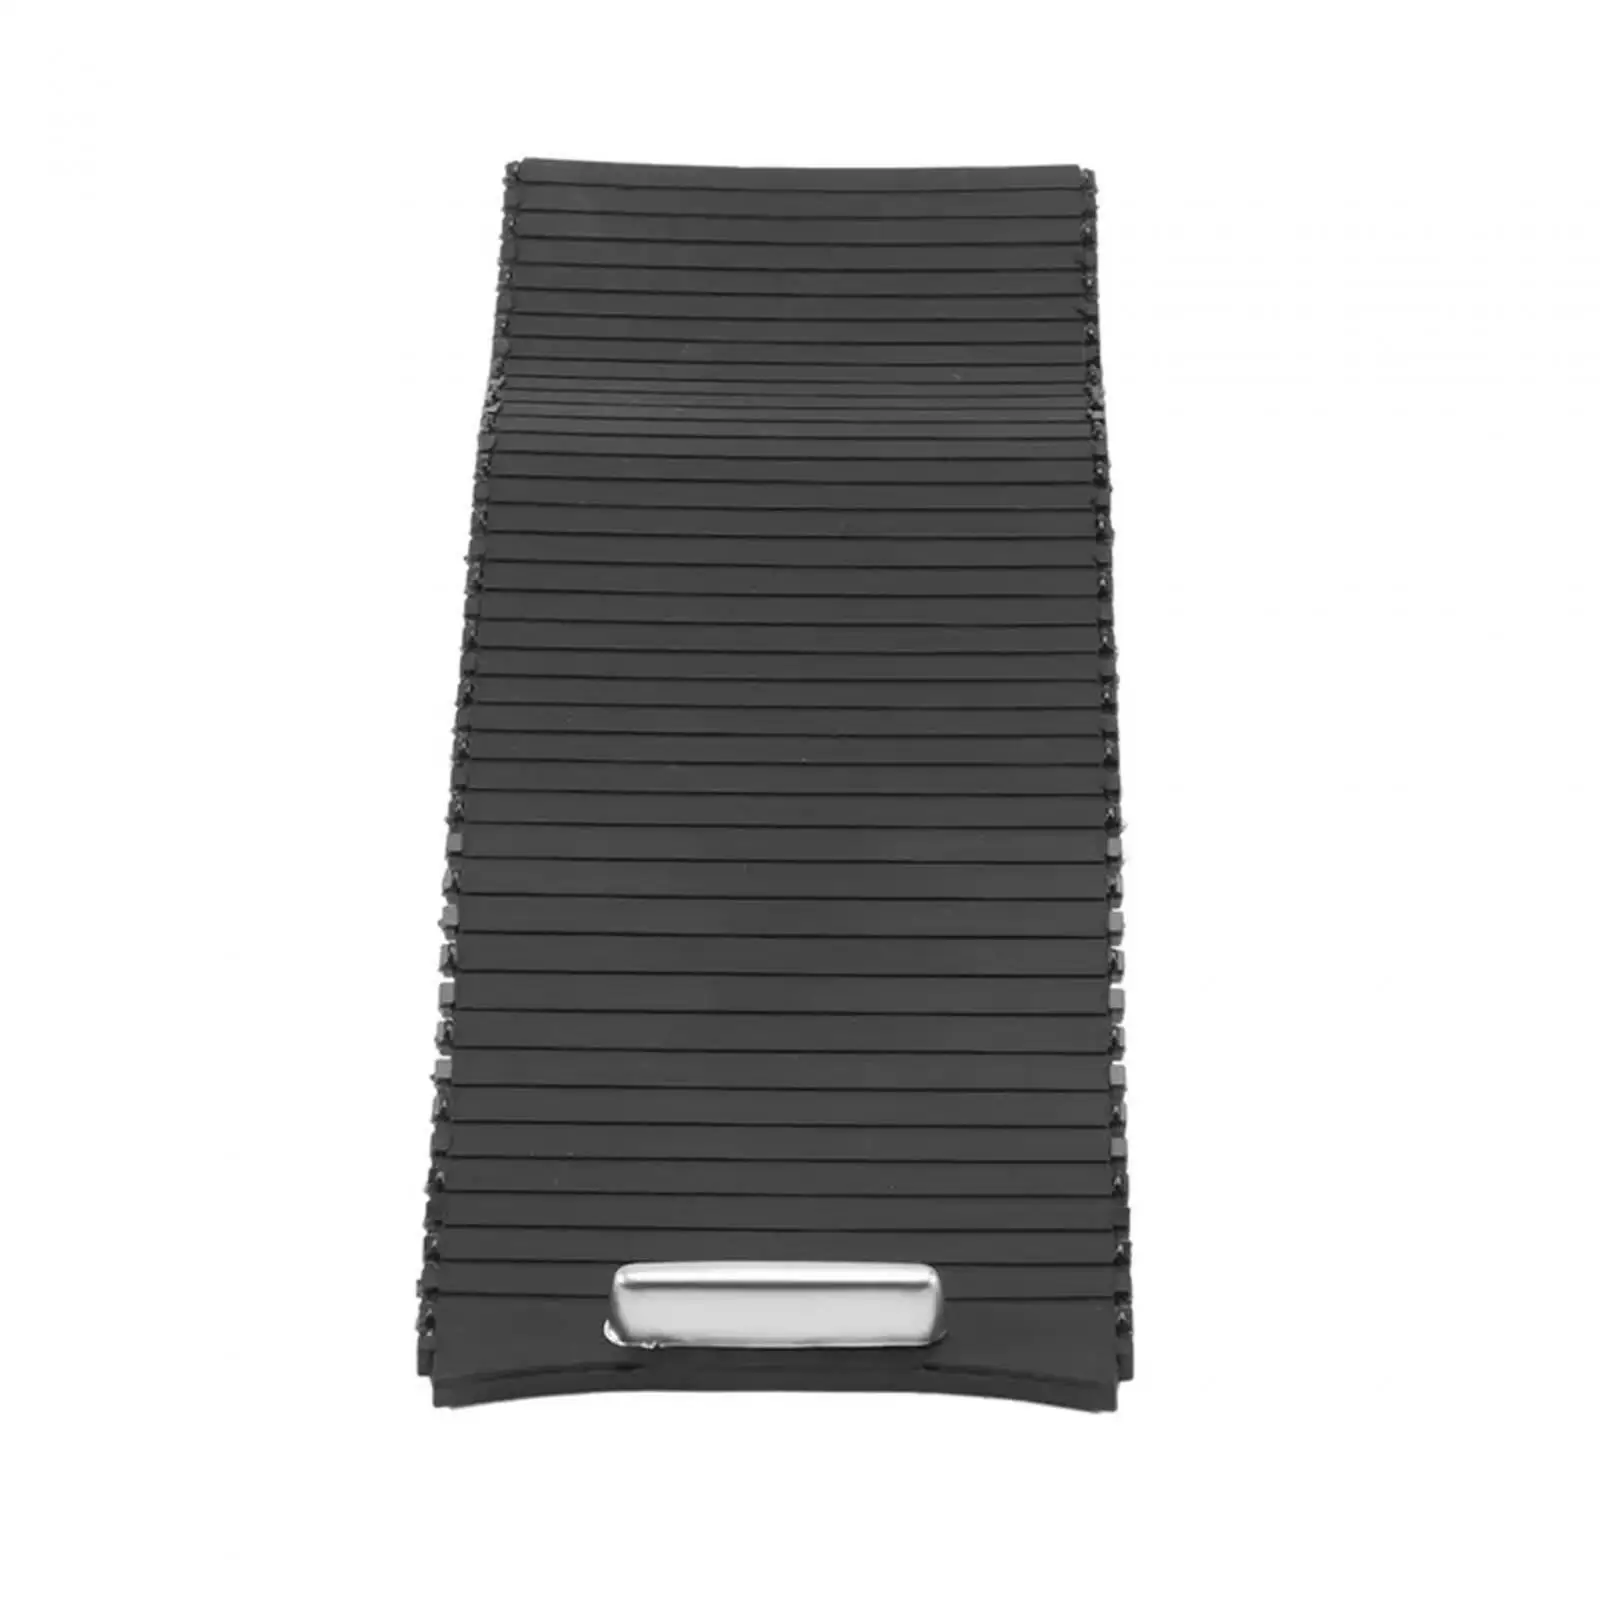 Arm Rest Center Console Cup Holder Slide Cover 5KD862531 Black for VW